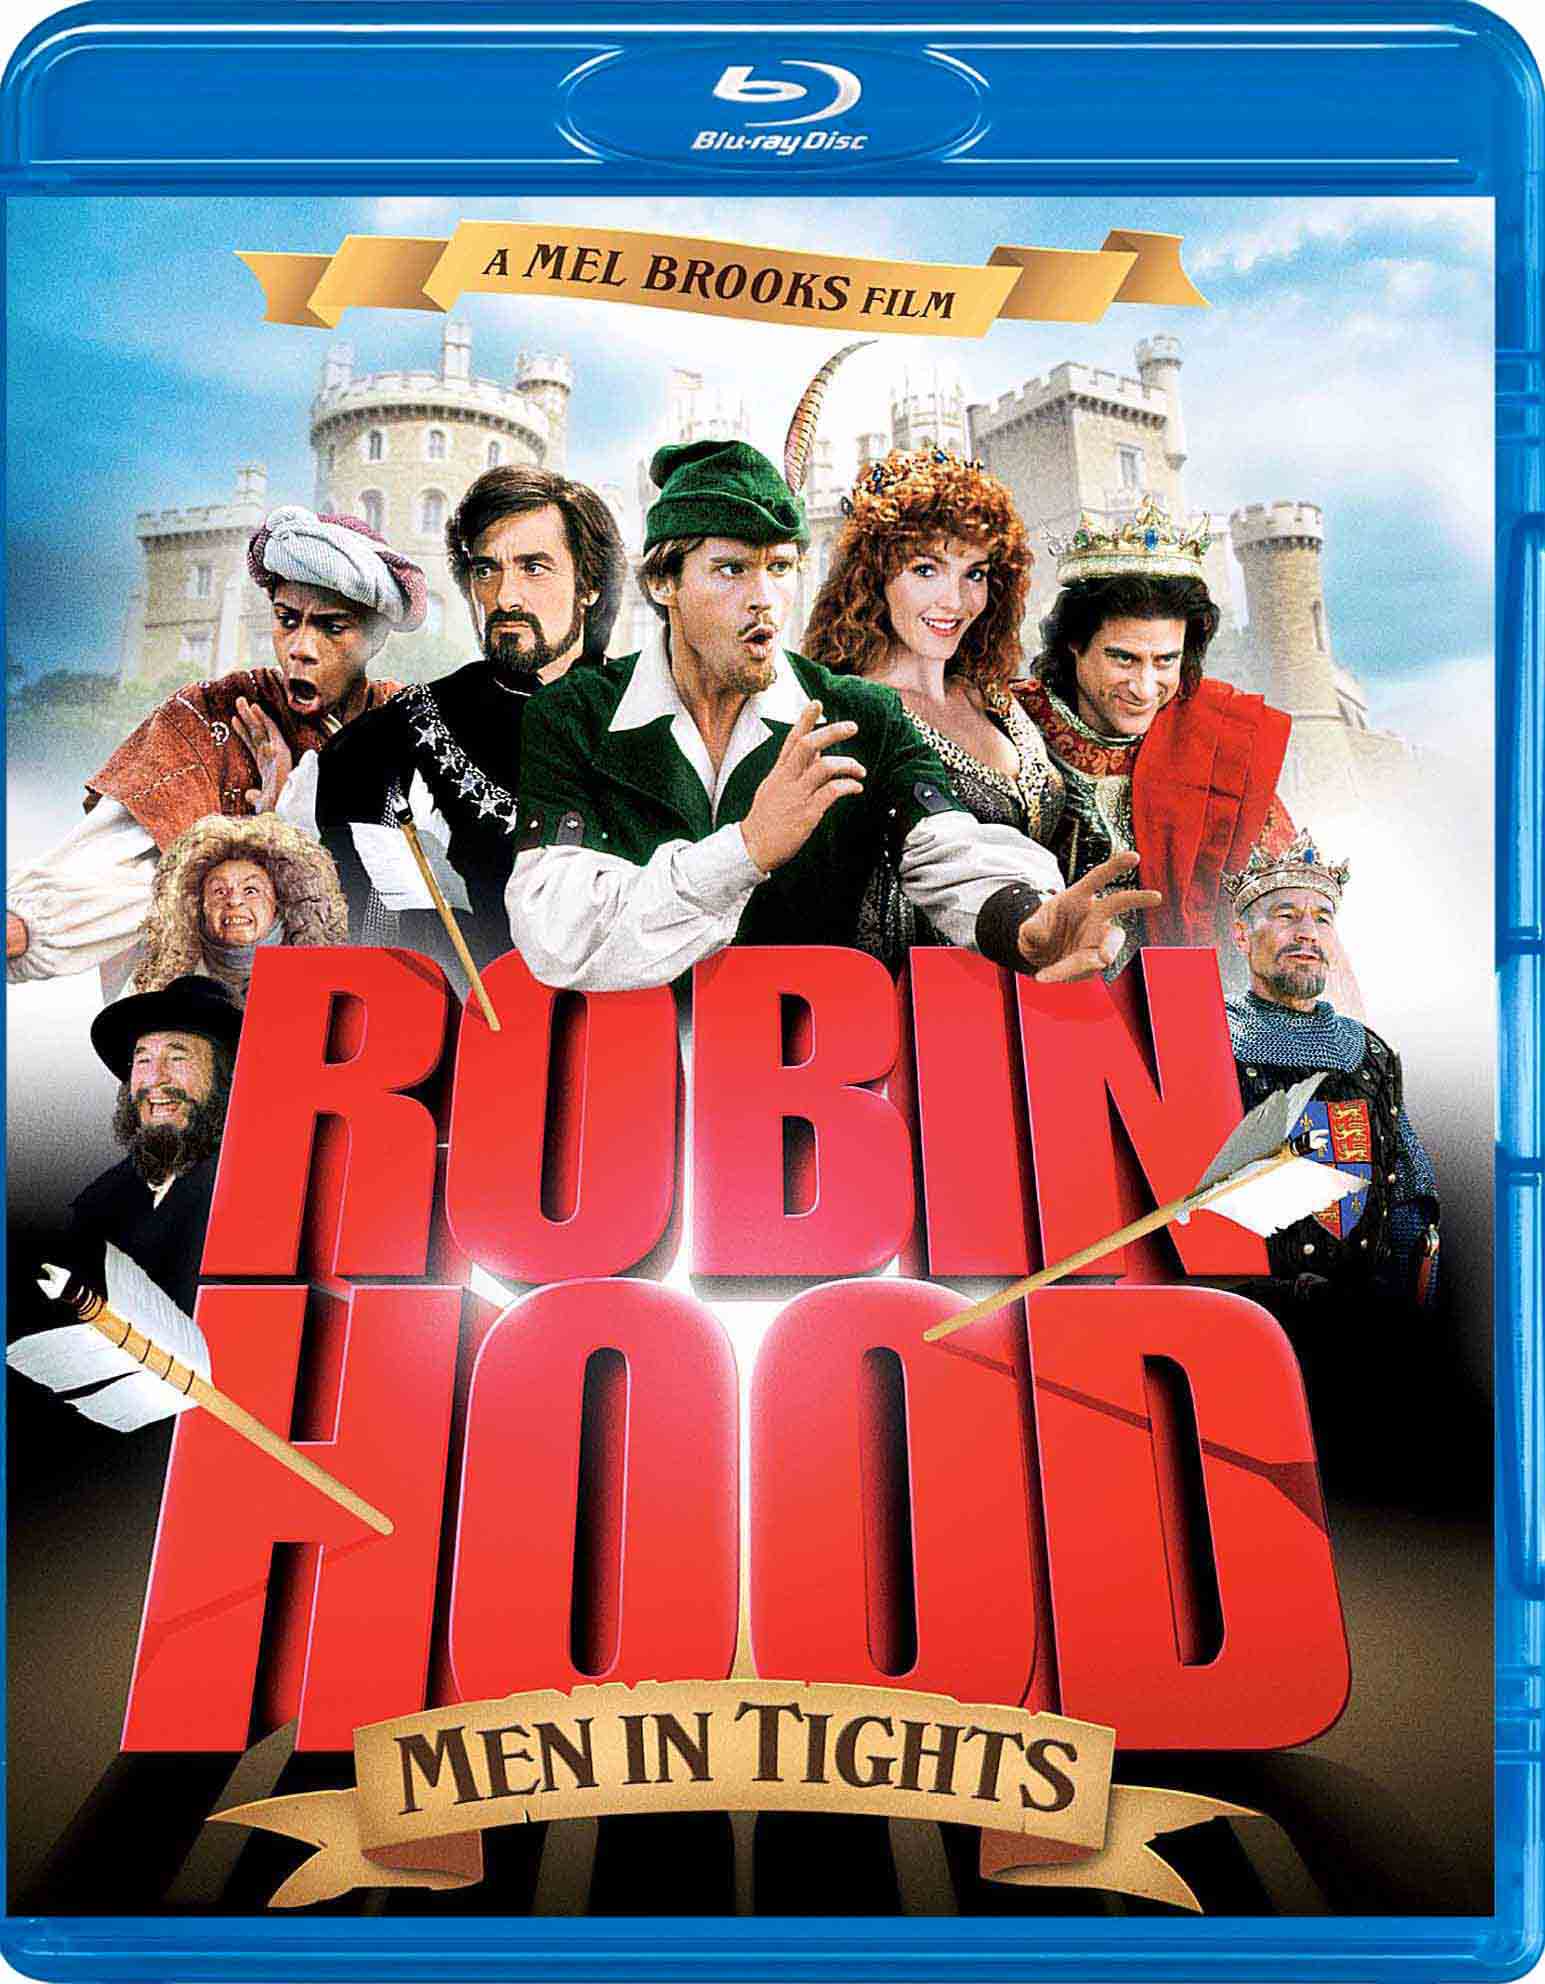 ROBIN HOOD - MEN IN TIGHTS - Blu-Ray.